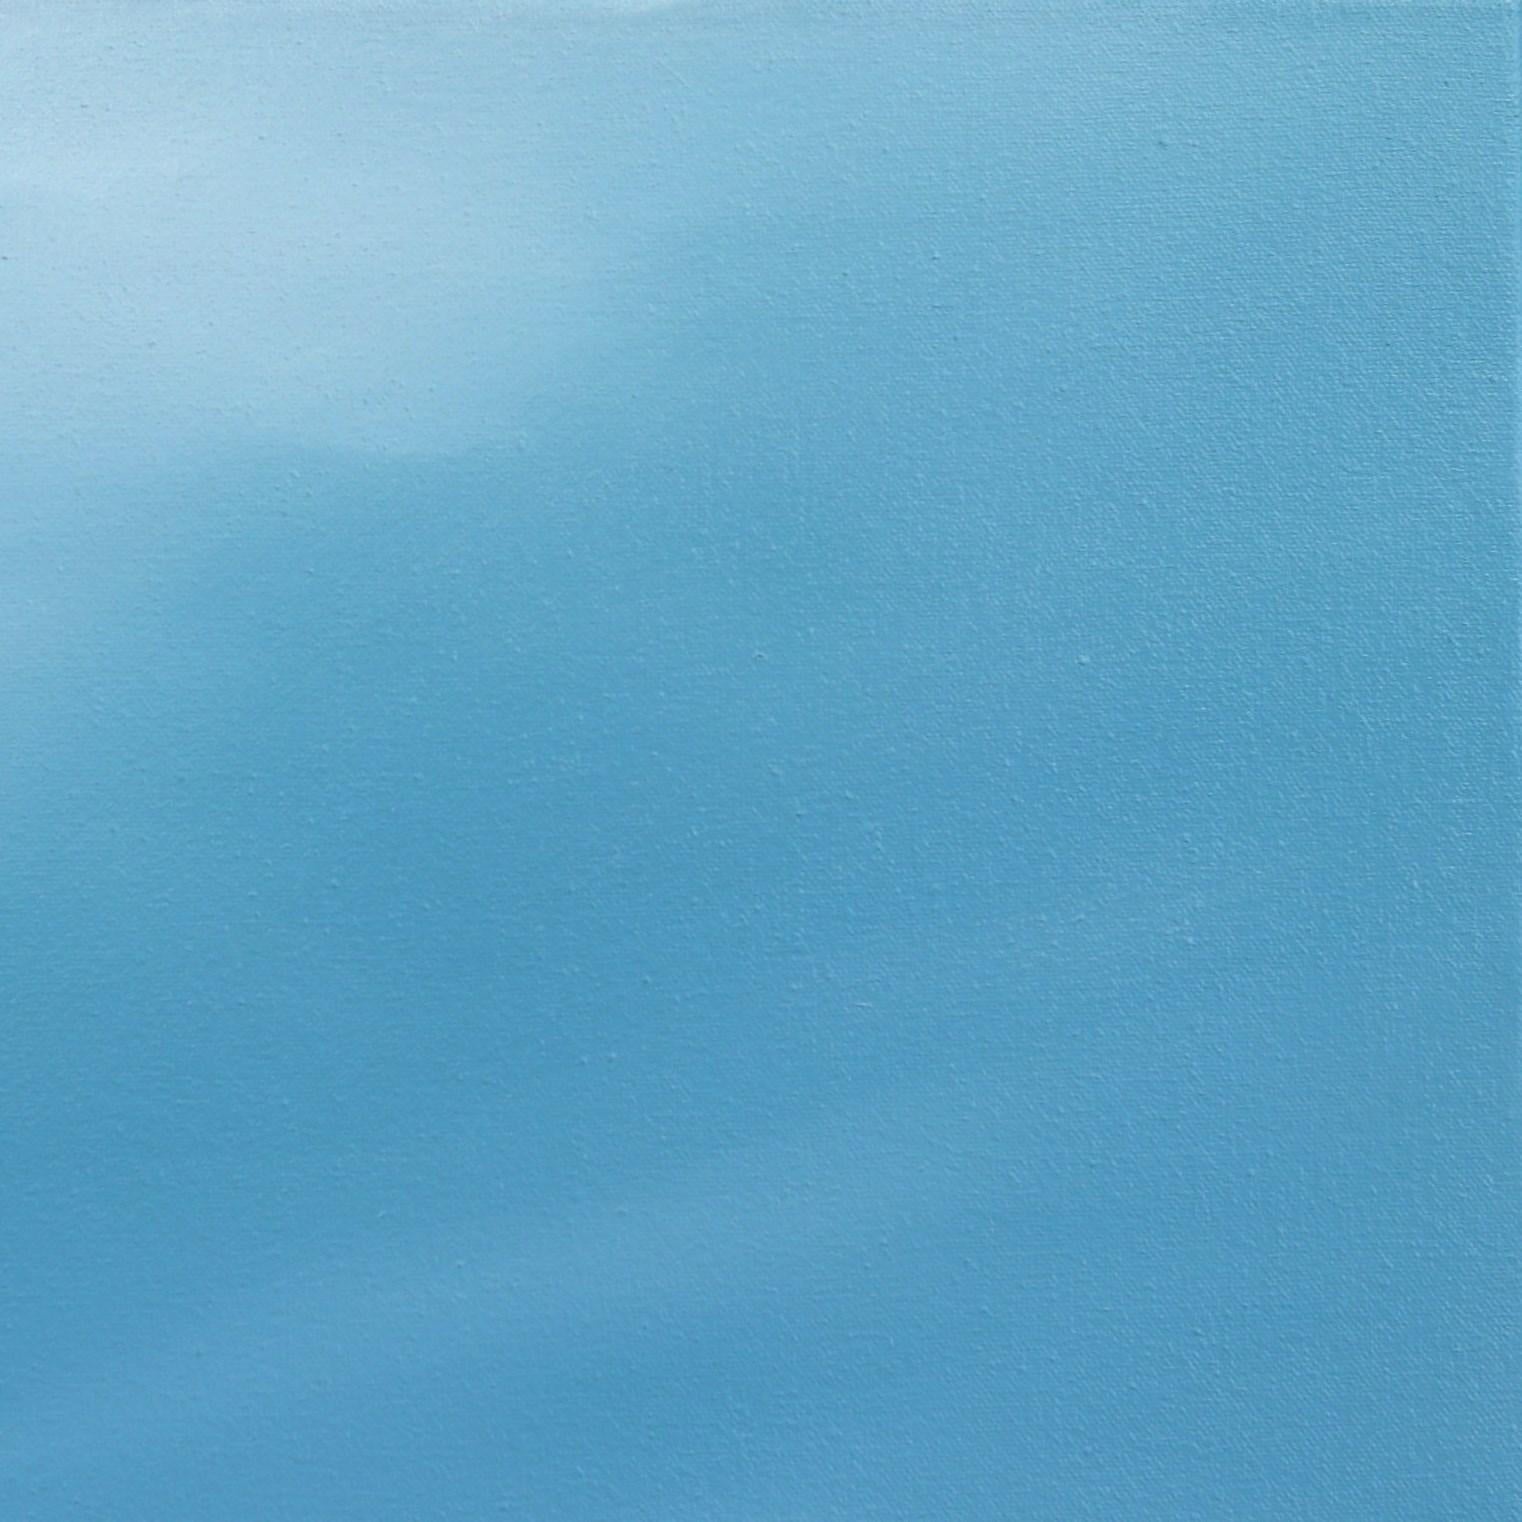 Untitled No. 769 - Framed Contemporary Minimalist Blue Ocean Landscape Artwork For Sale 2